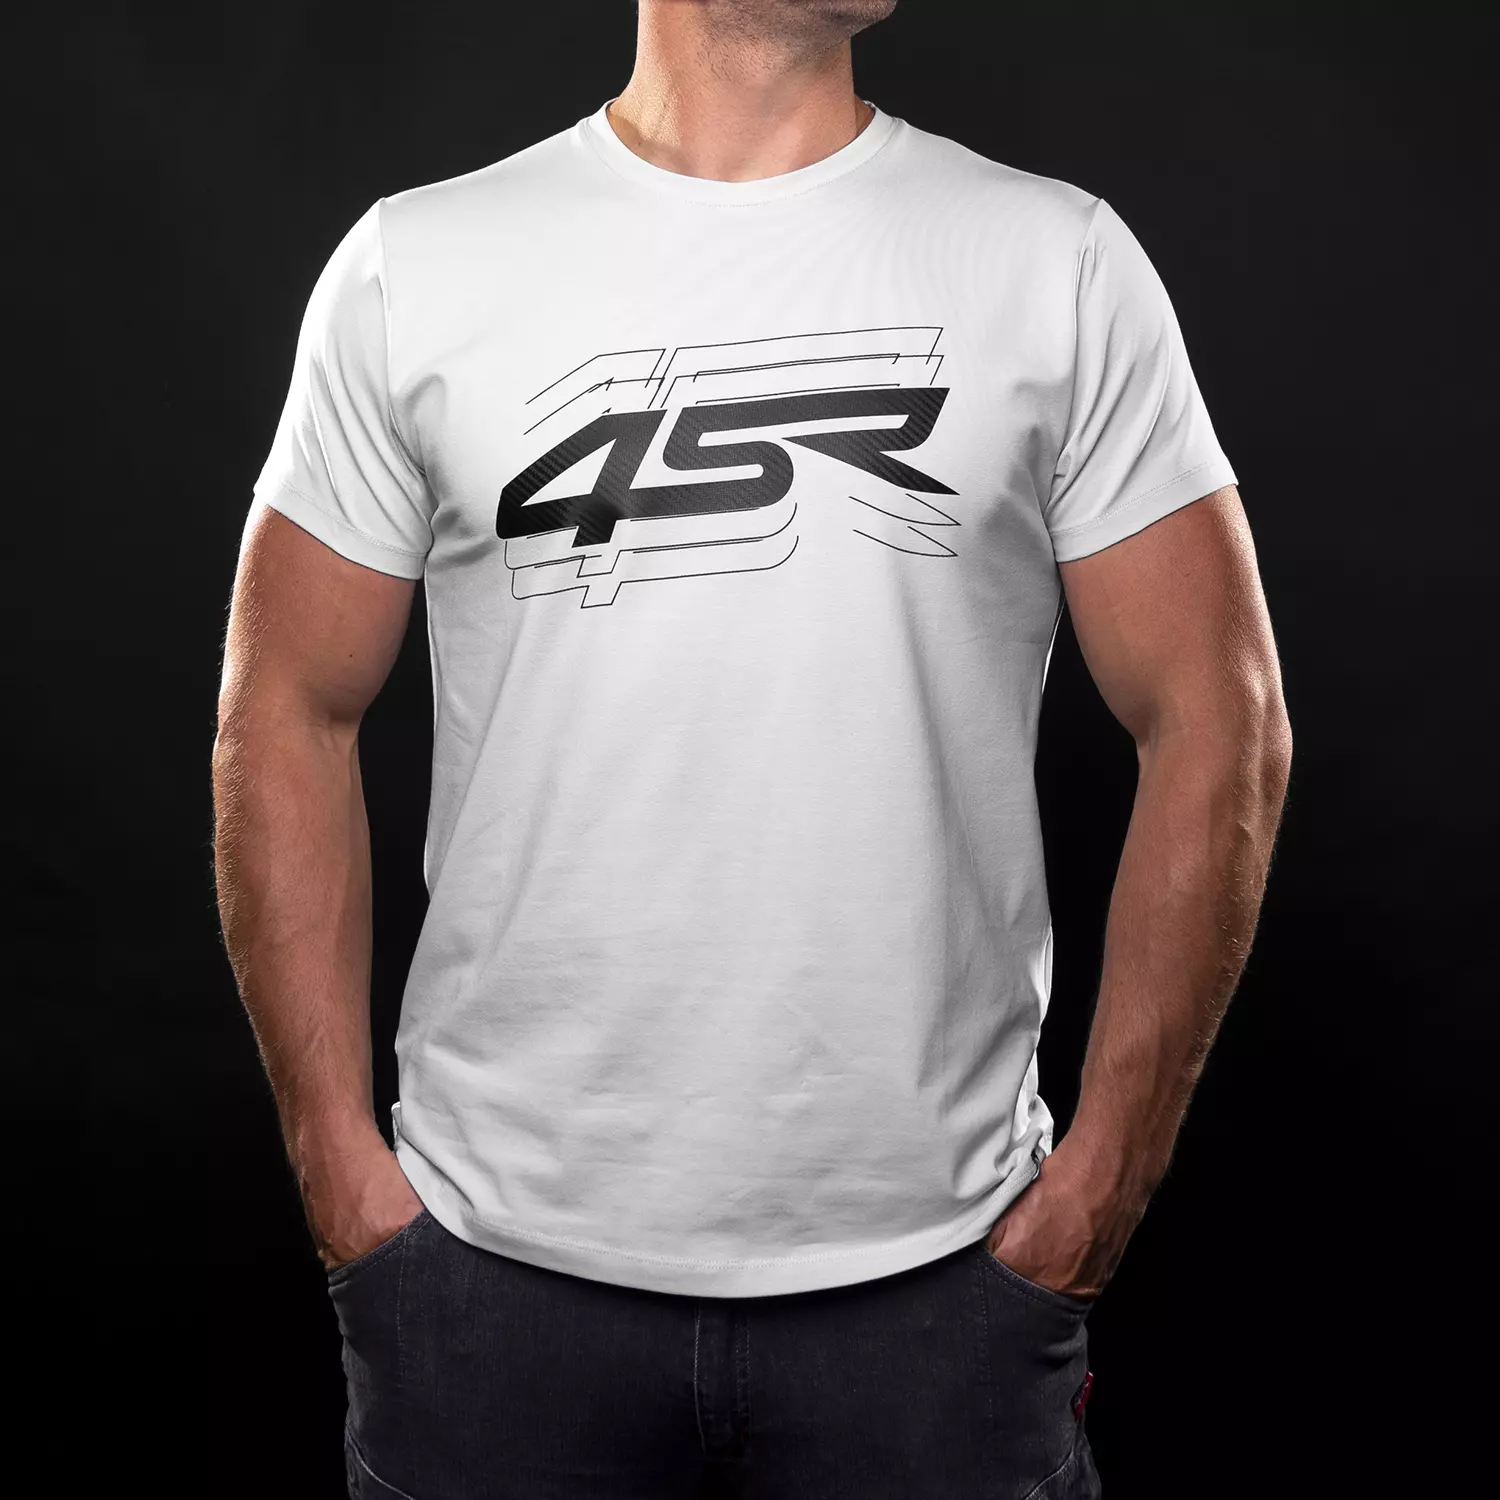 4SR T Shirt Carbon Grey